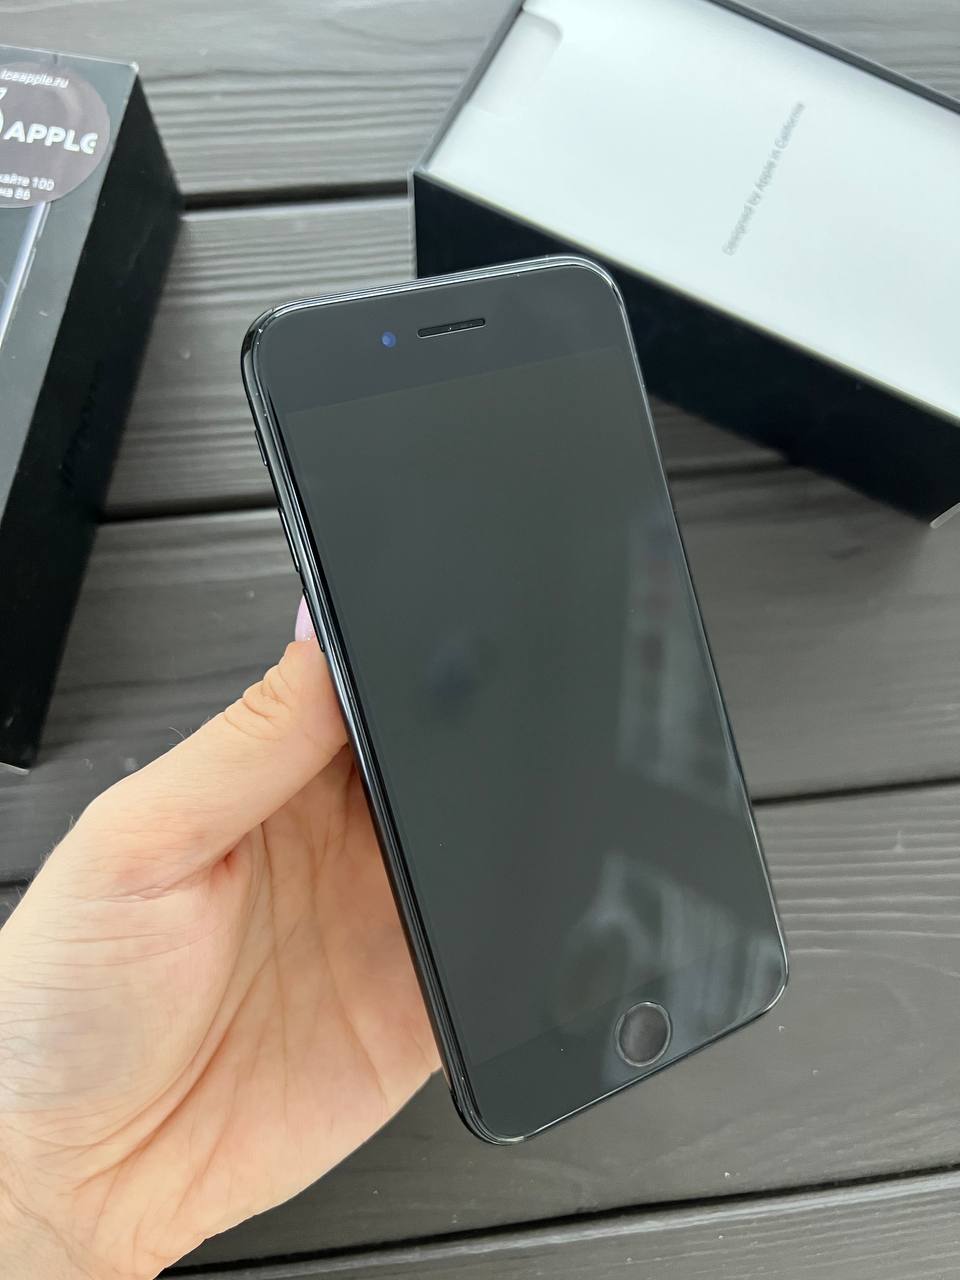 Apple iPhone 7 128gb Jet Black